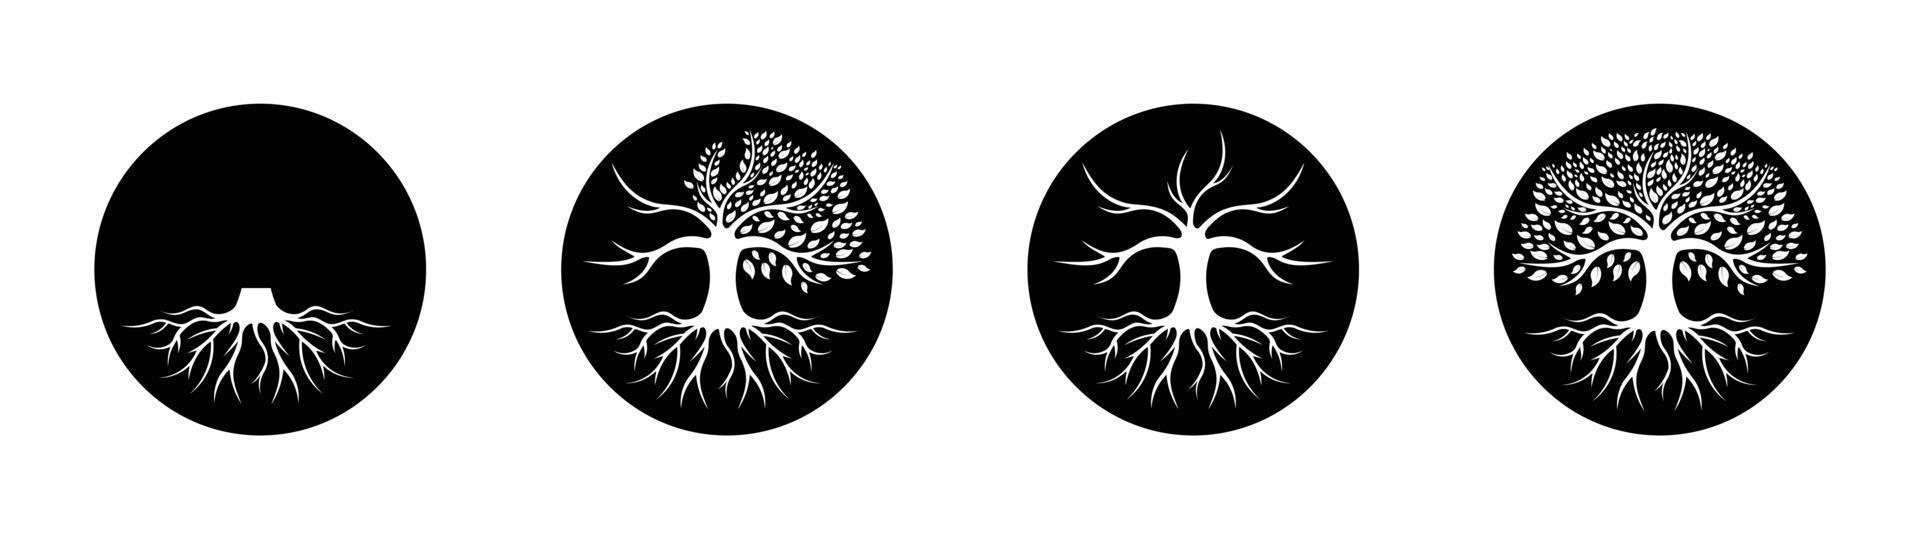 Tree of life logo design inspiration isolated on white background ,black oak tree logo and roots design vector illustration